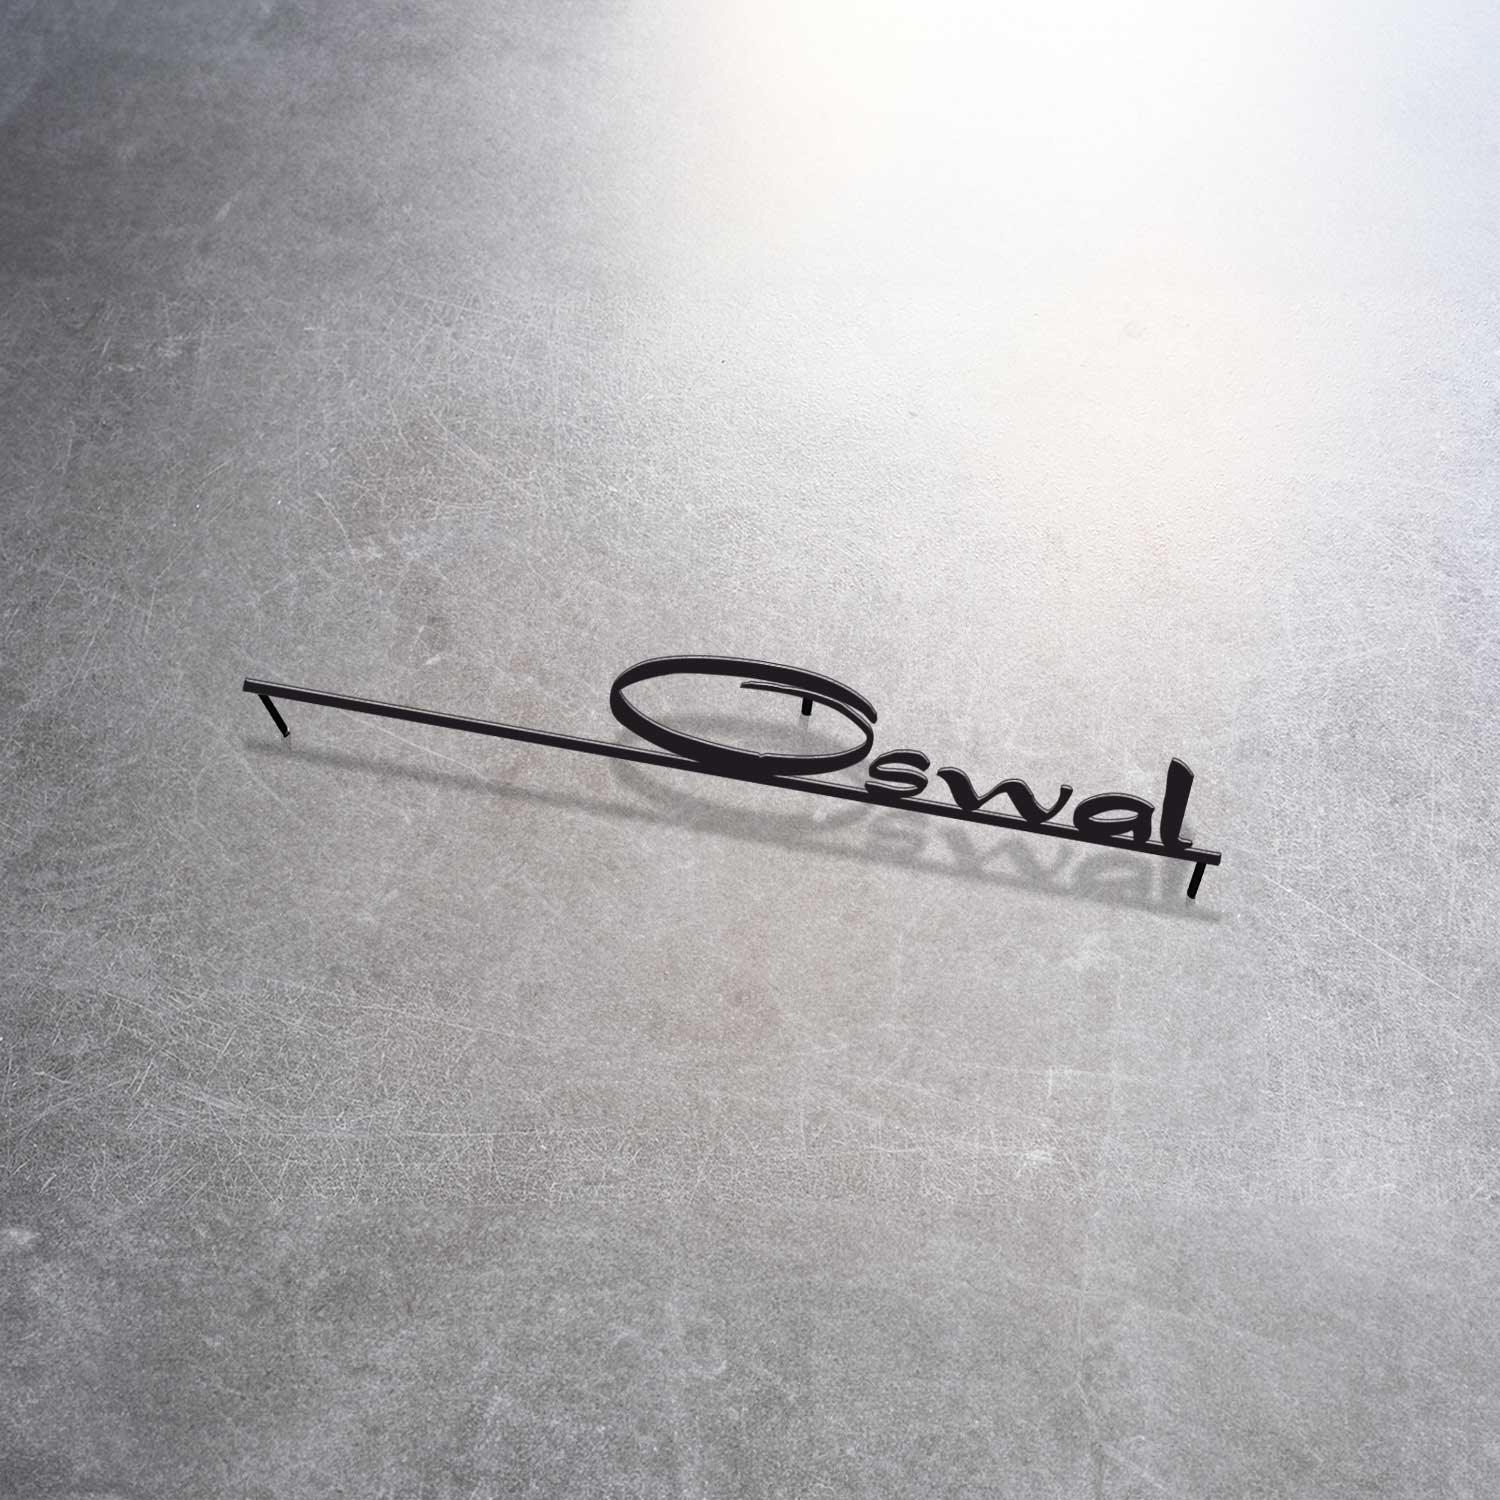 Oswal - Cutout Steel Name Plate - Housenama